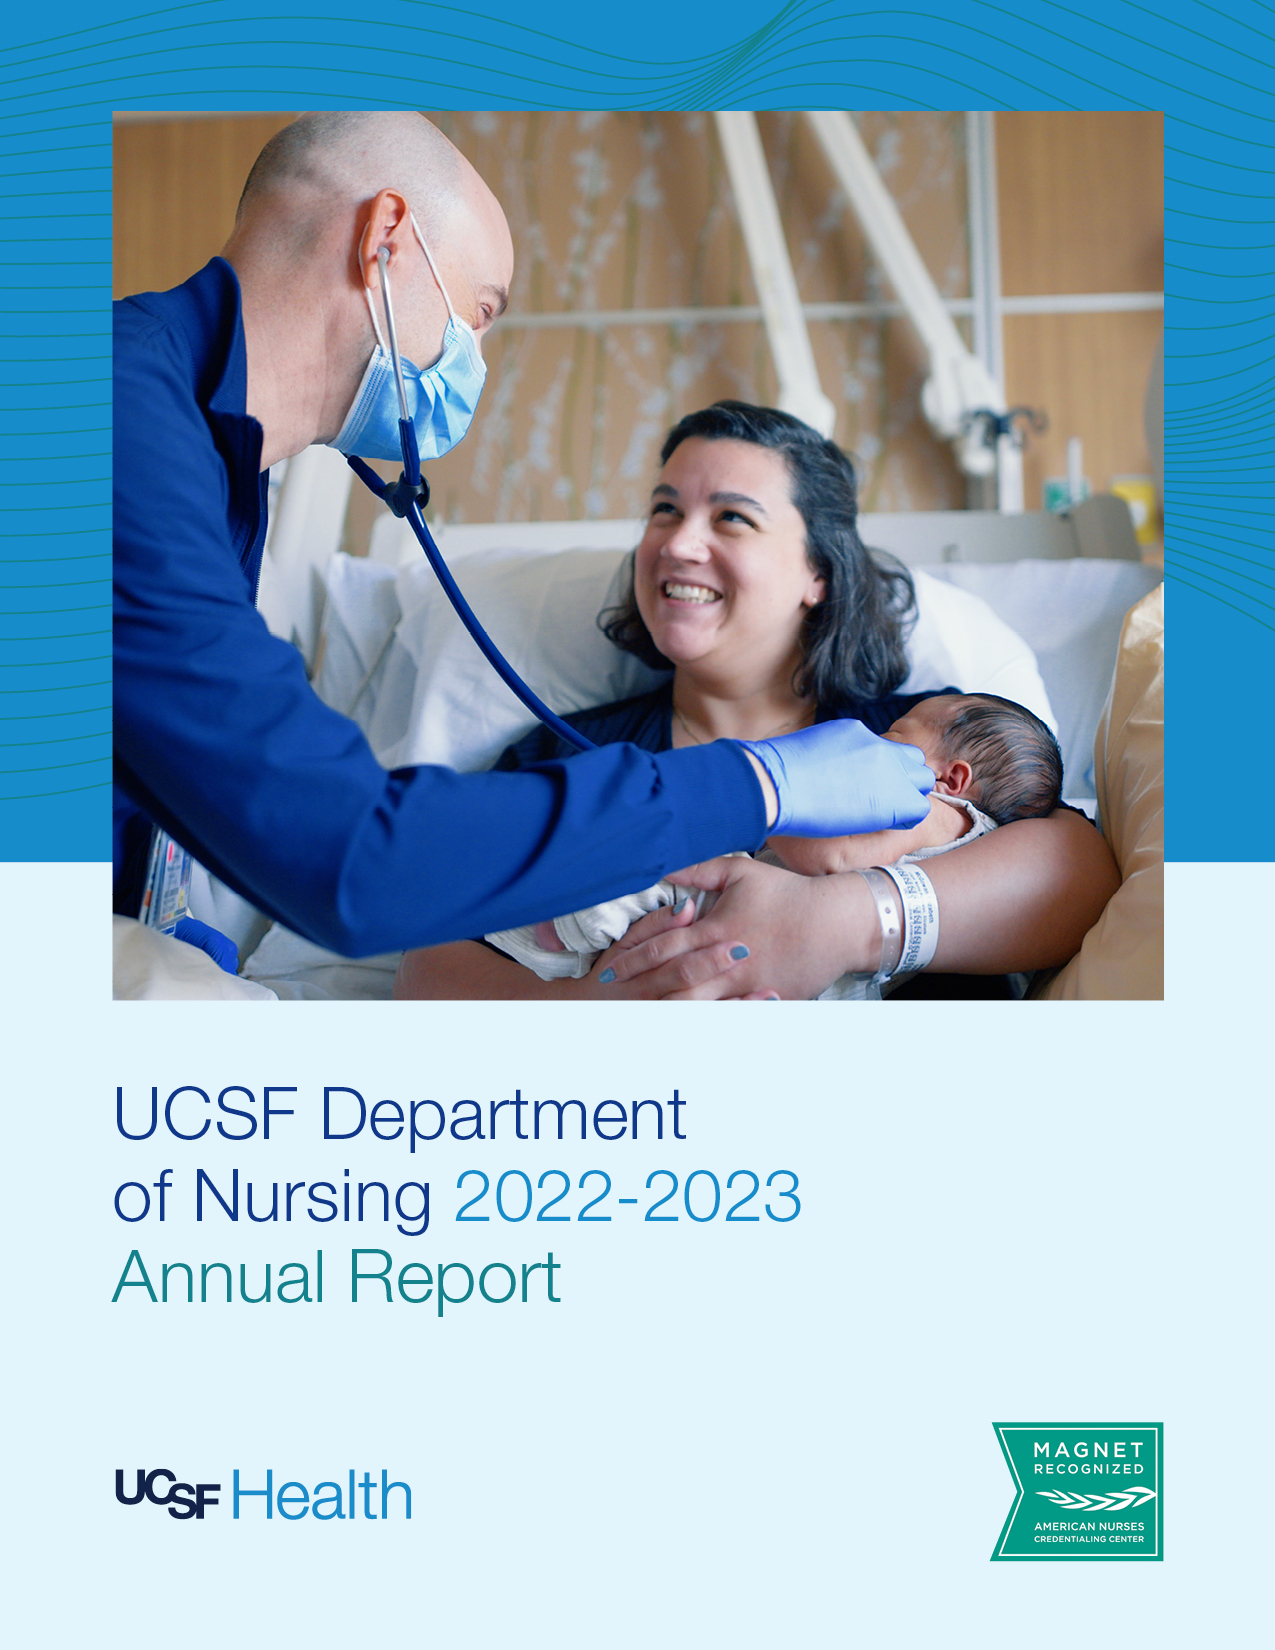 Department of Nursing Annual Report Cover Image